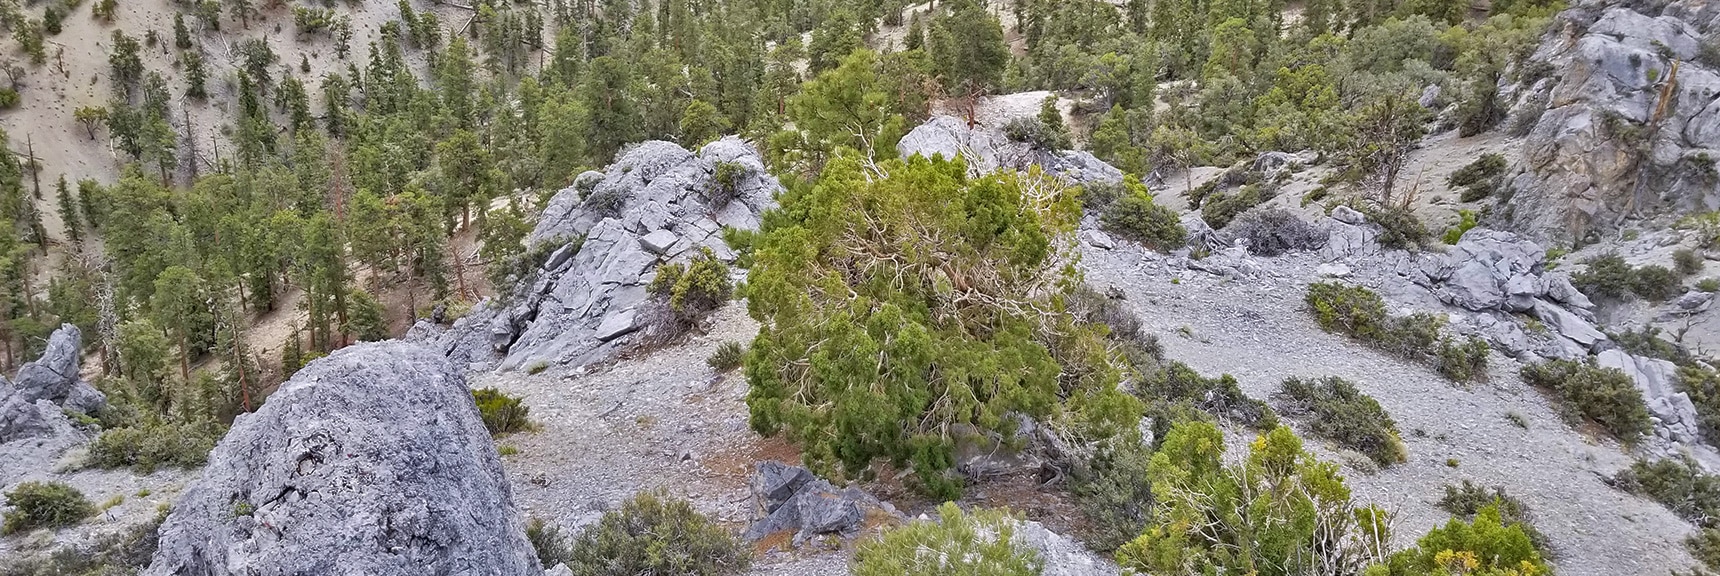 Bristlecone Pine Below 9,235ft High Point Bluff Northeast of McFarland Peak | Sawmill Trail to McFarland Peak | Spring Mountains, Nevada